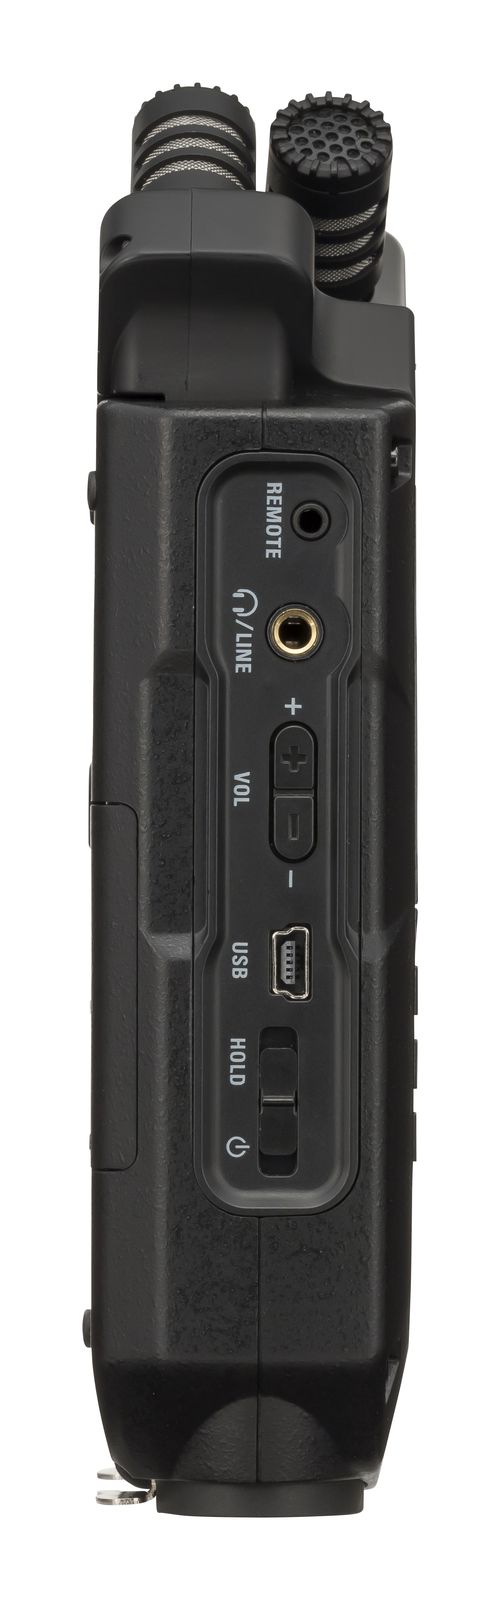 Zoom H4n Pro Black 4-Track Handy Recorder